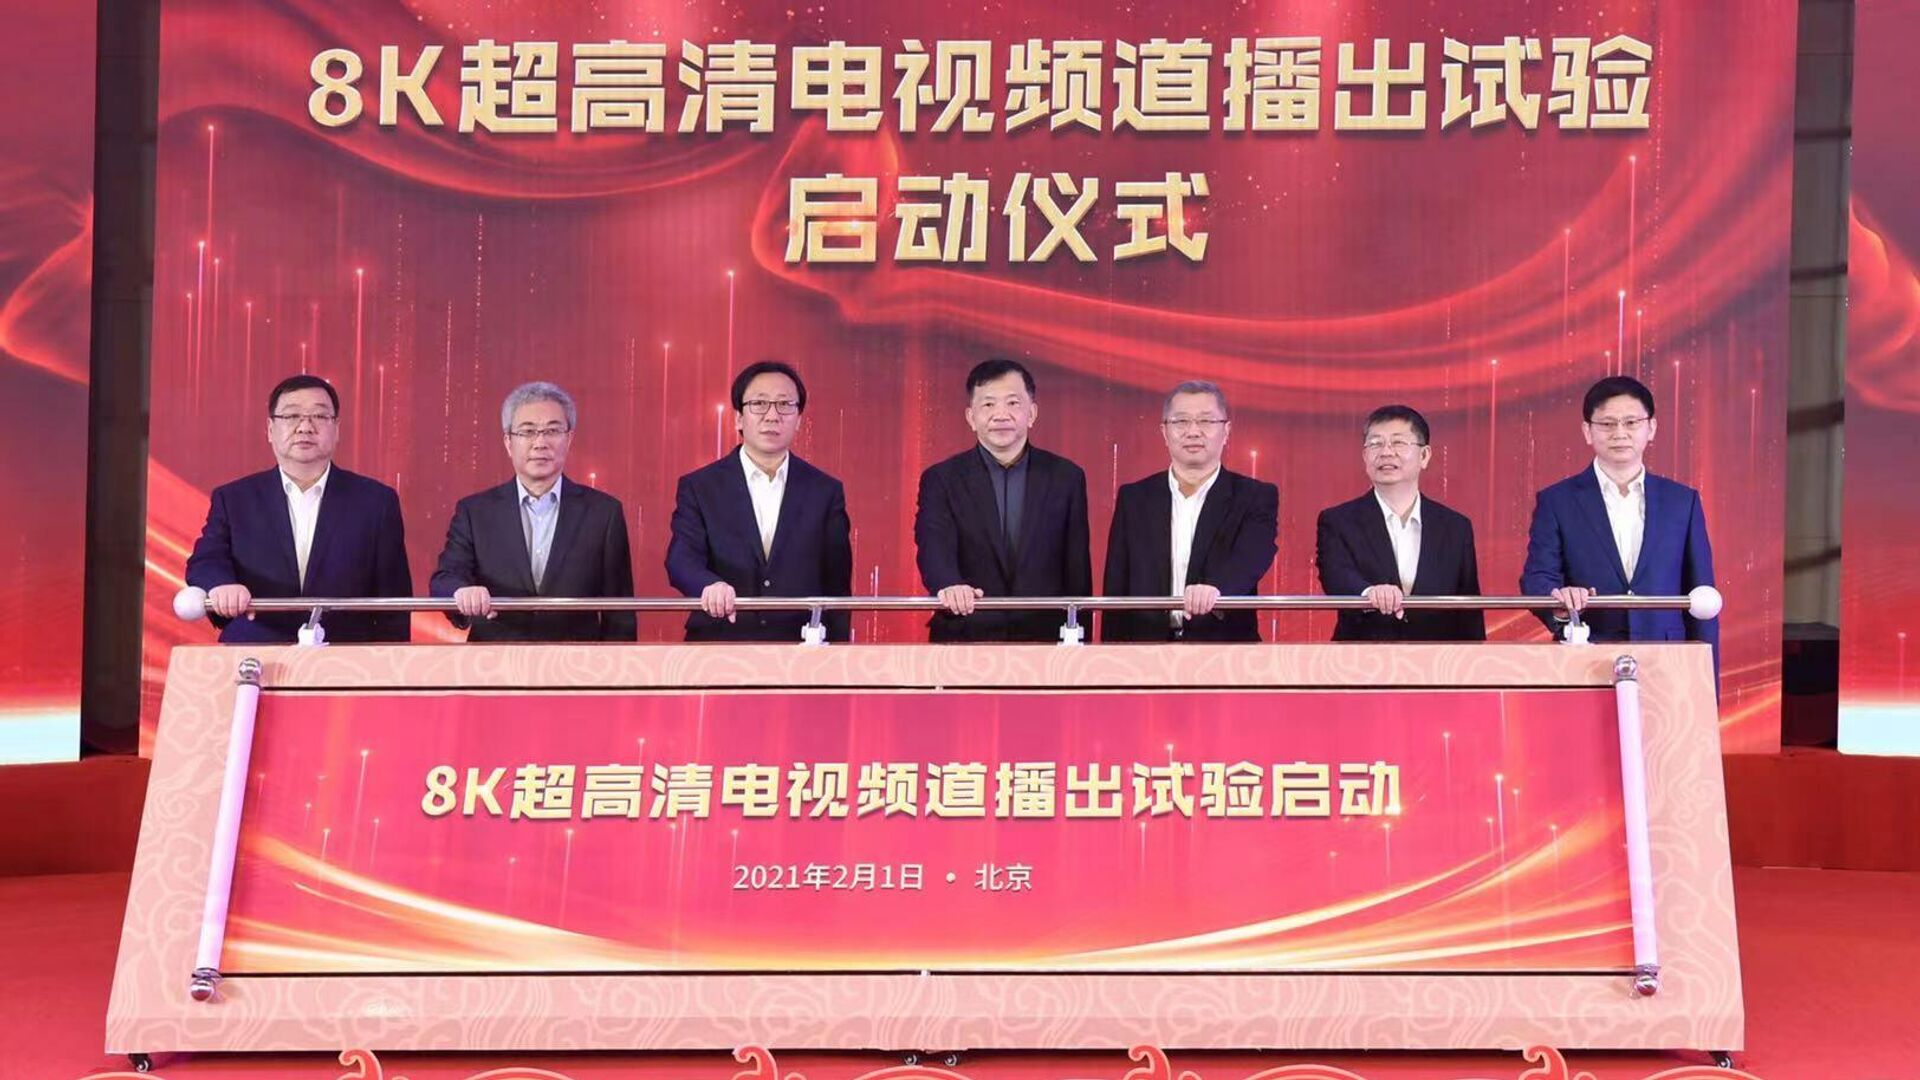 В КНР запустили тестовый режим телевещания 8K с помощью формата связи 5G - РИА Новости, 1920, 02.02.2021